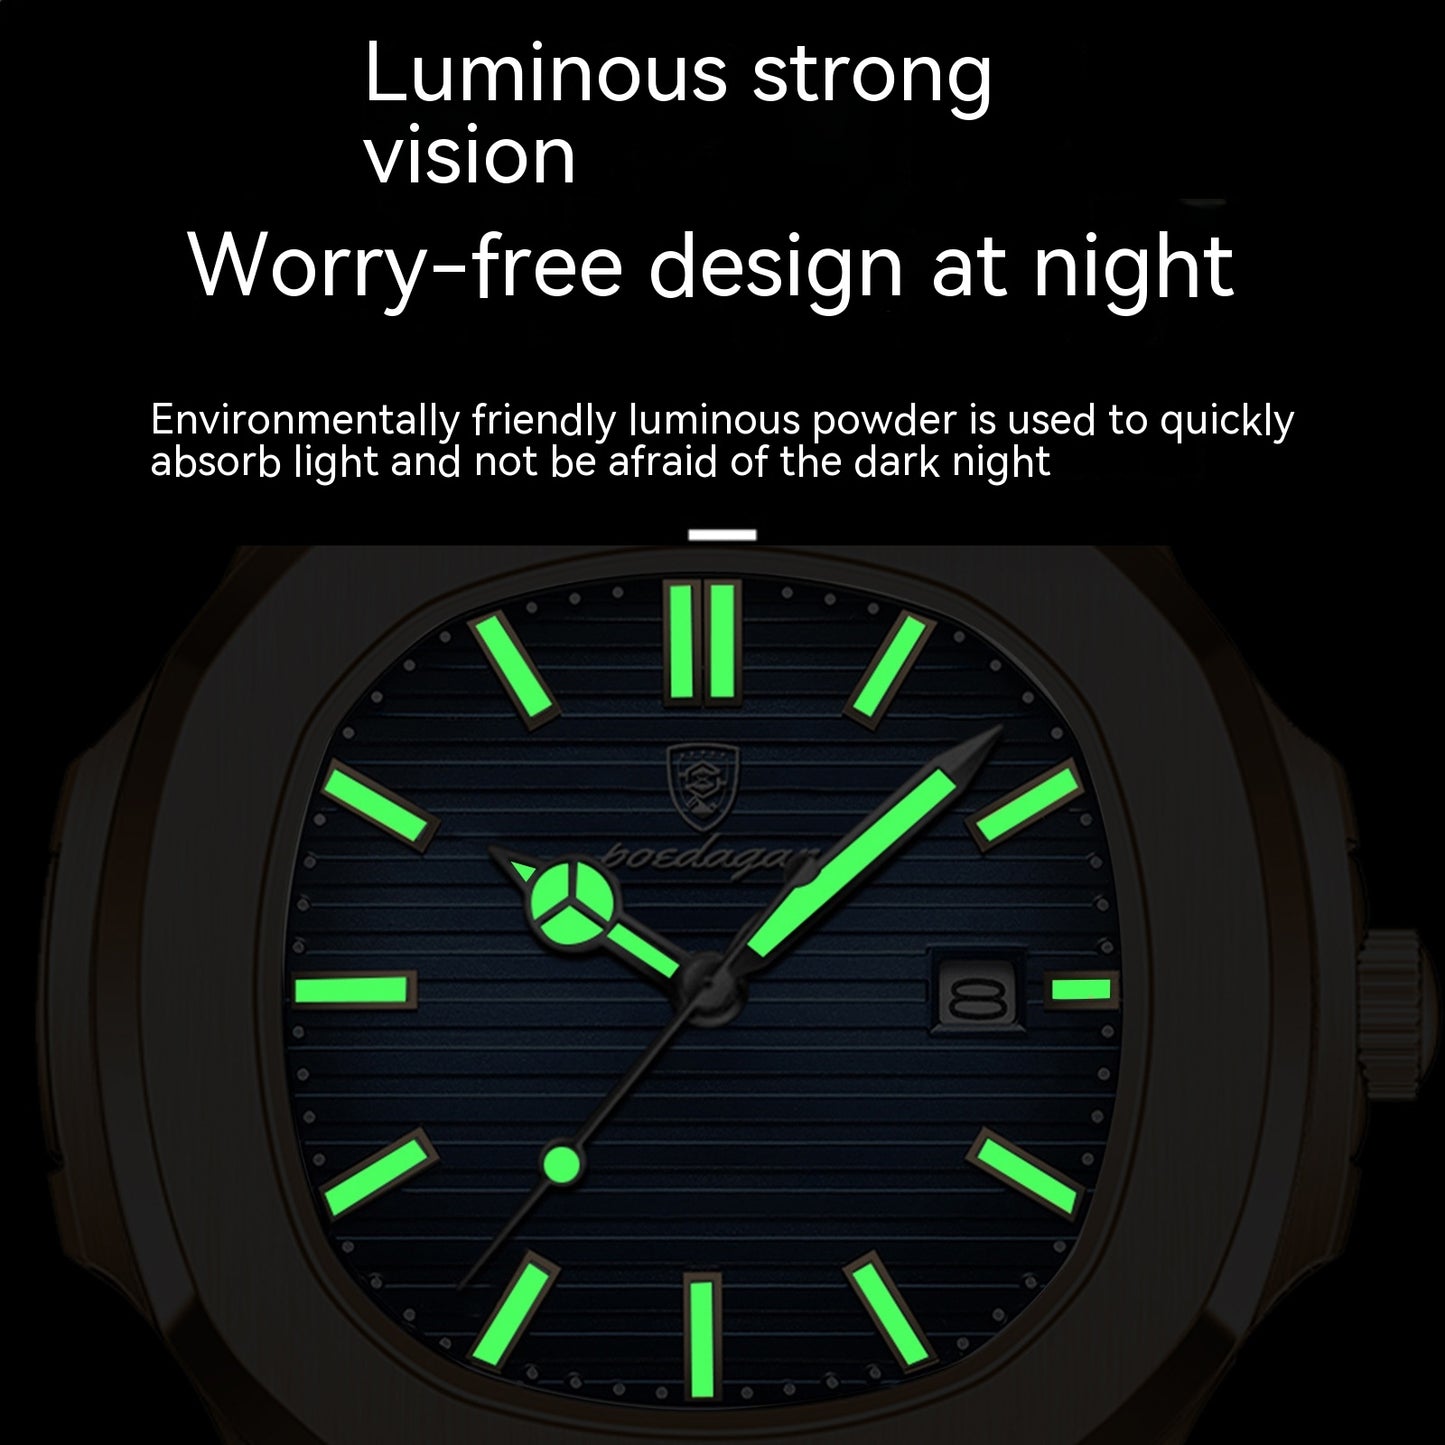 Ultra-thin Waterproof Luxury Quartz Watch